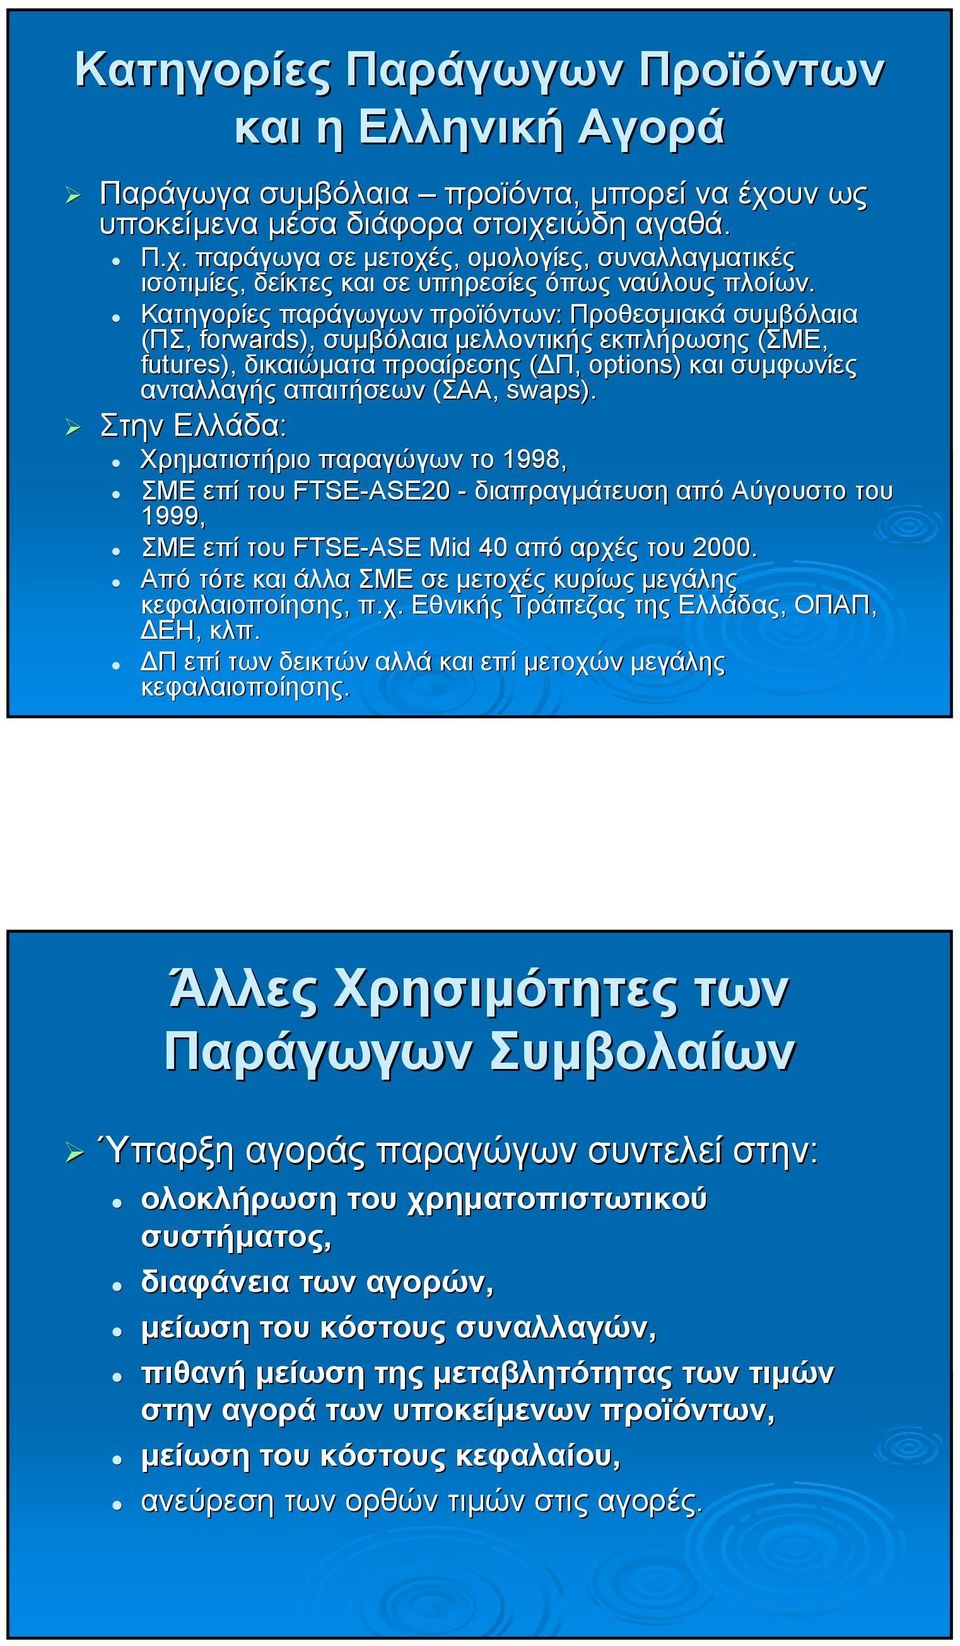 swaps). Στην Ελλάδα: Χρηµατιστήριο παραγώγων το 1998, ΣΜΕ επί του FTSE-ASE - διαπραγµάτευση από Αύγουστο του 1999, ΣΜΕ επί του FTSE-ASE Mid 40 από αρχές του 2000.